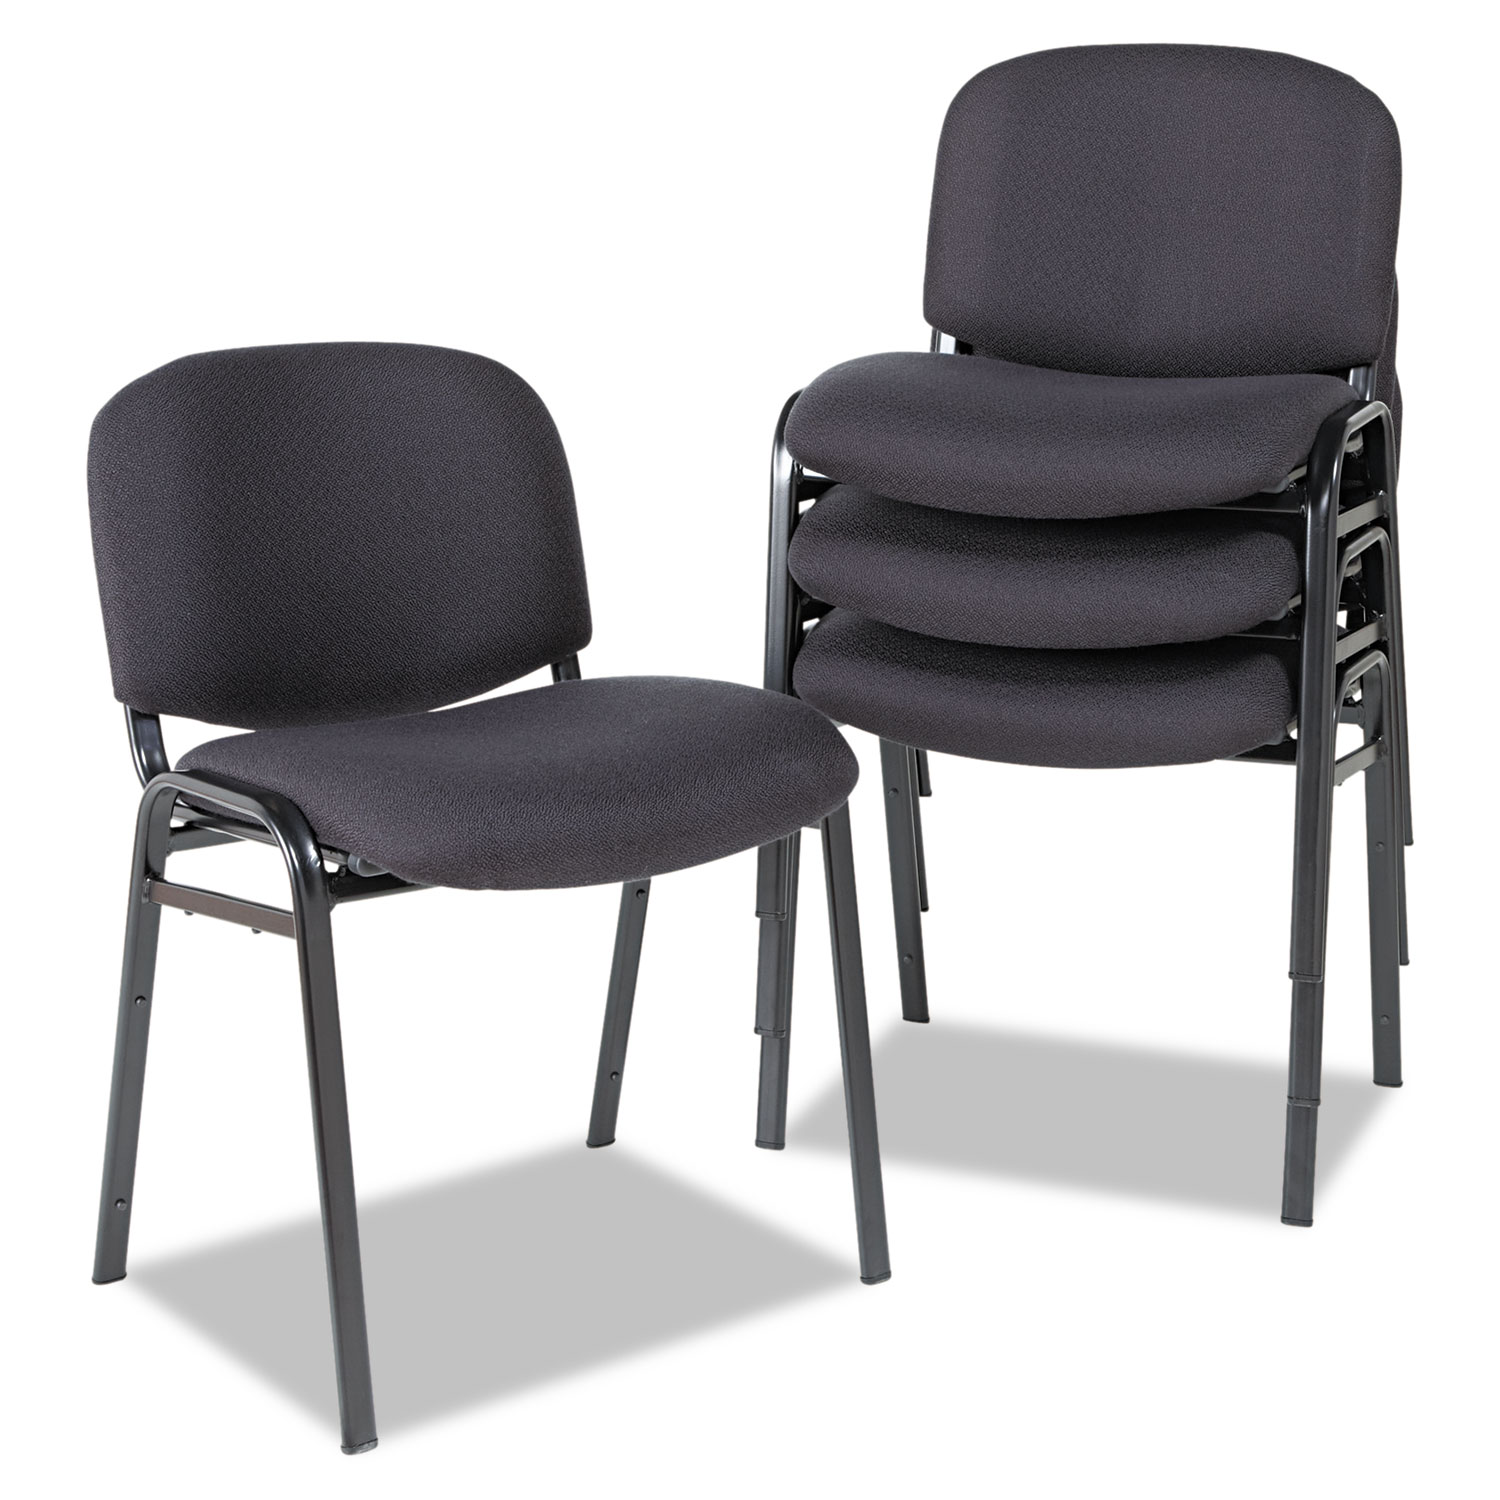 Alera Continental Series Stacking Chairs, Black Fabric Upholstery, 4/Carton